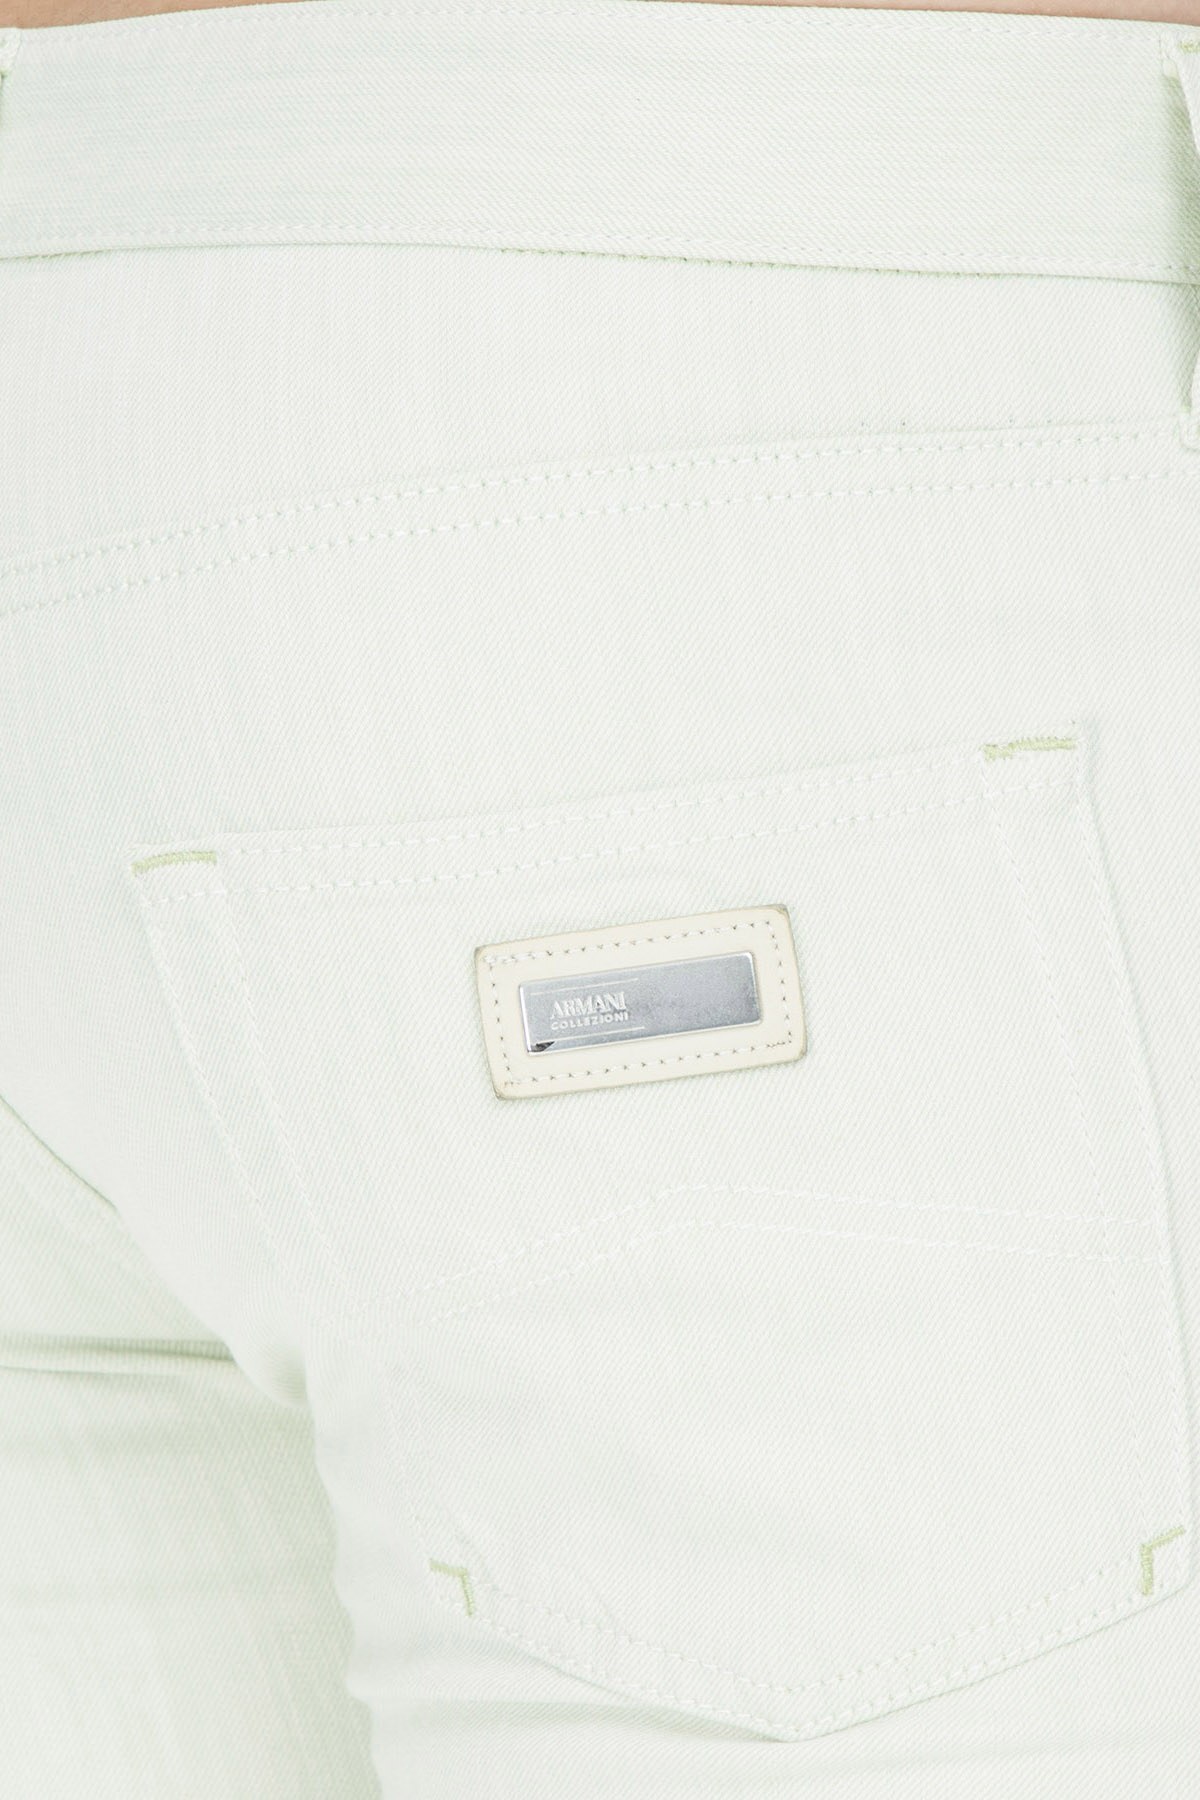 Armani Collezioni Jeans Erkek Kot Pantolon CIJ06 PT C36 